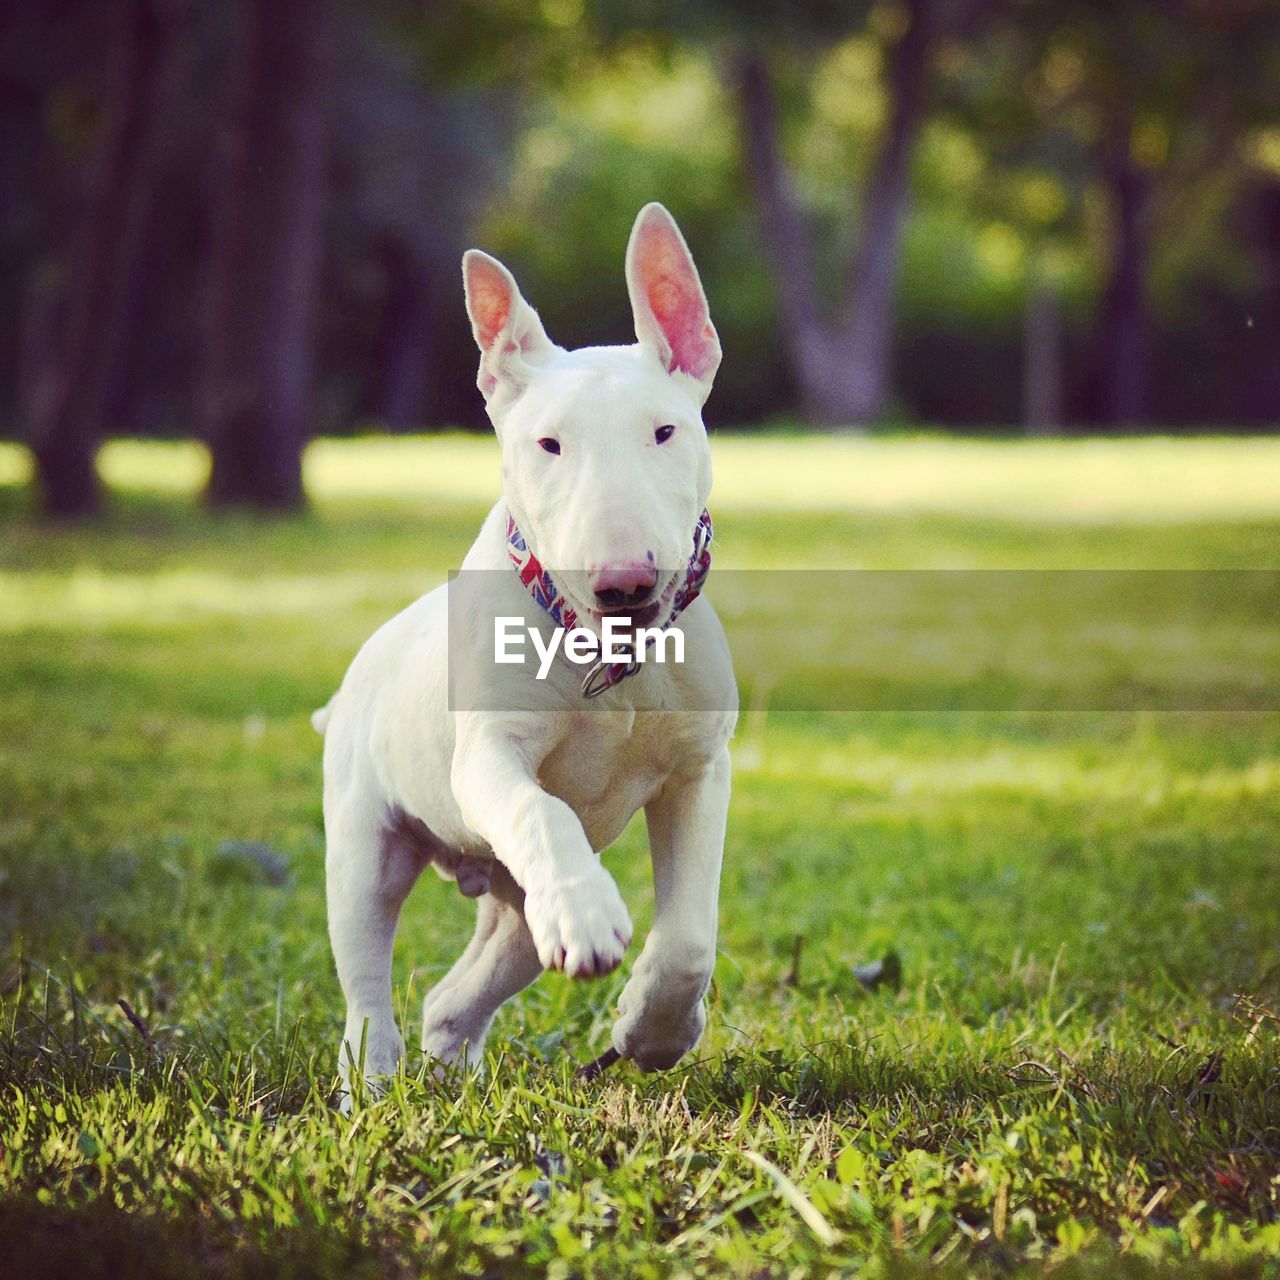 Portrait of dog running on grassy field